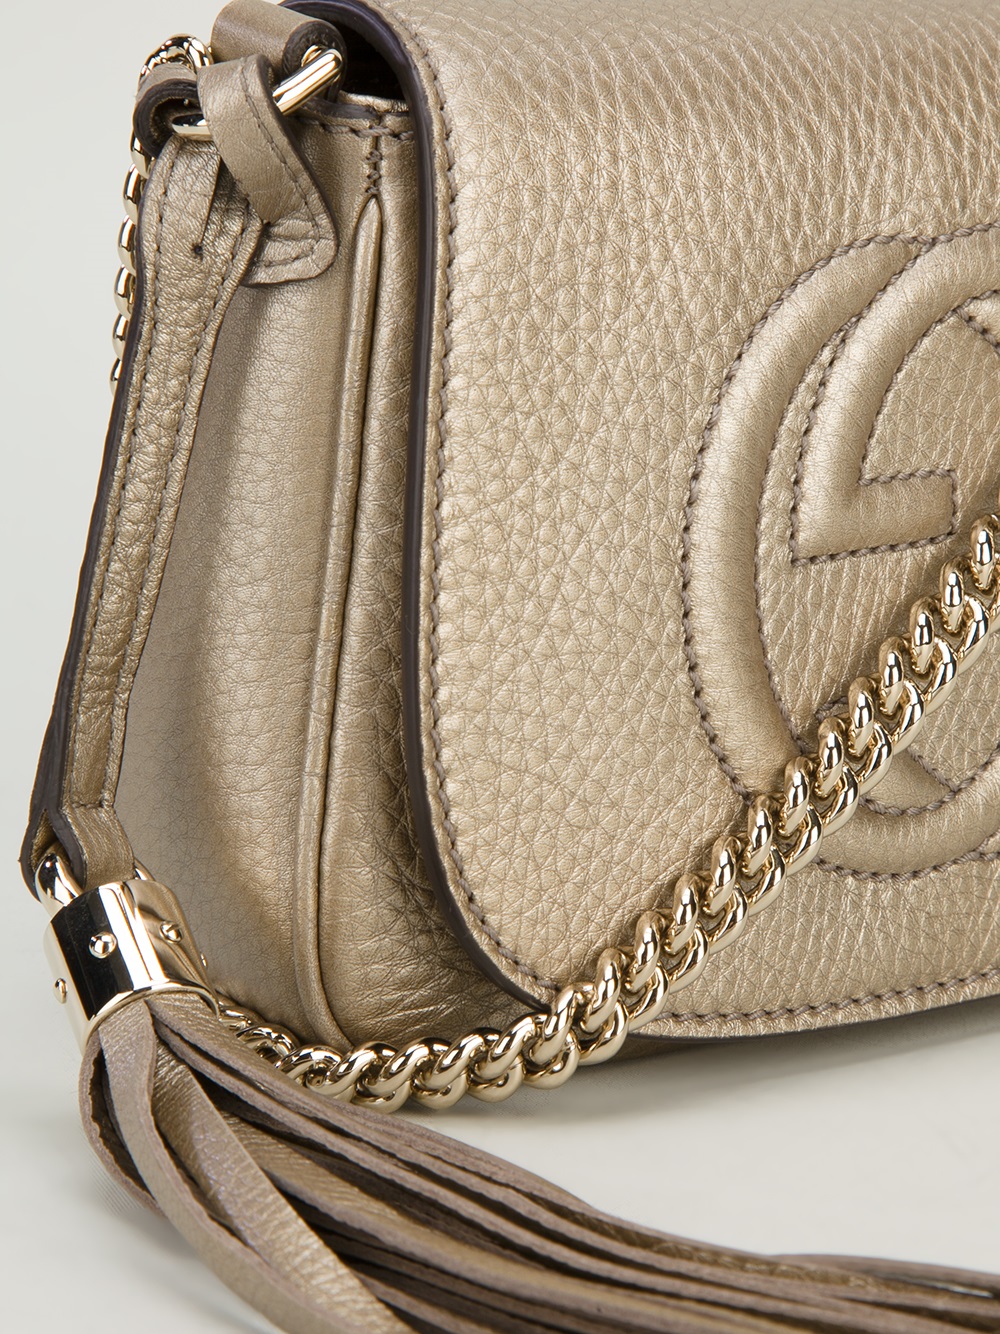 Lyst - Gucci Small Shoulder Bag in Metallic